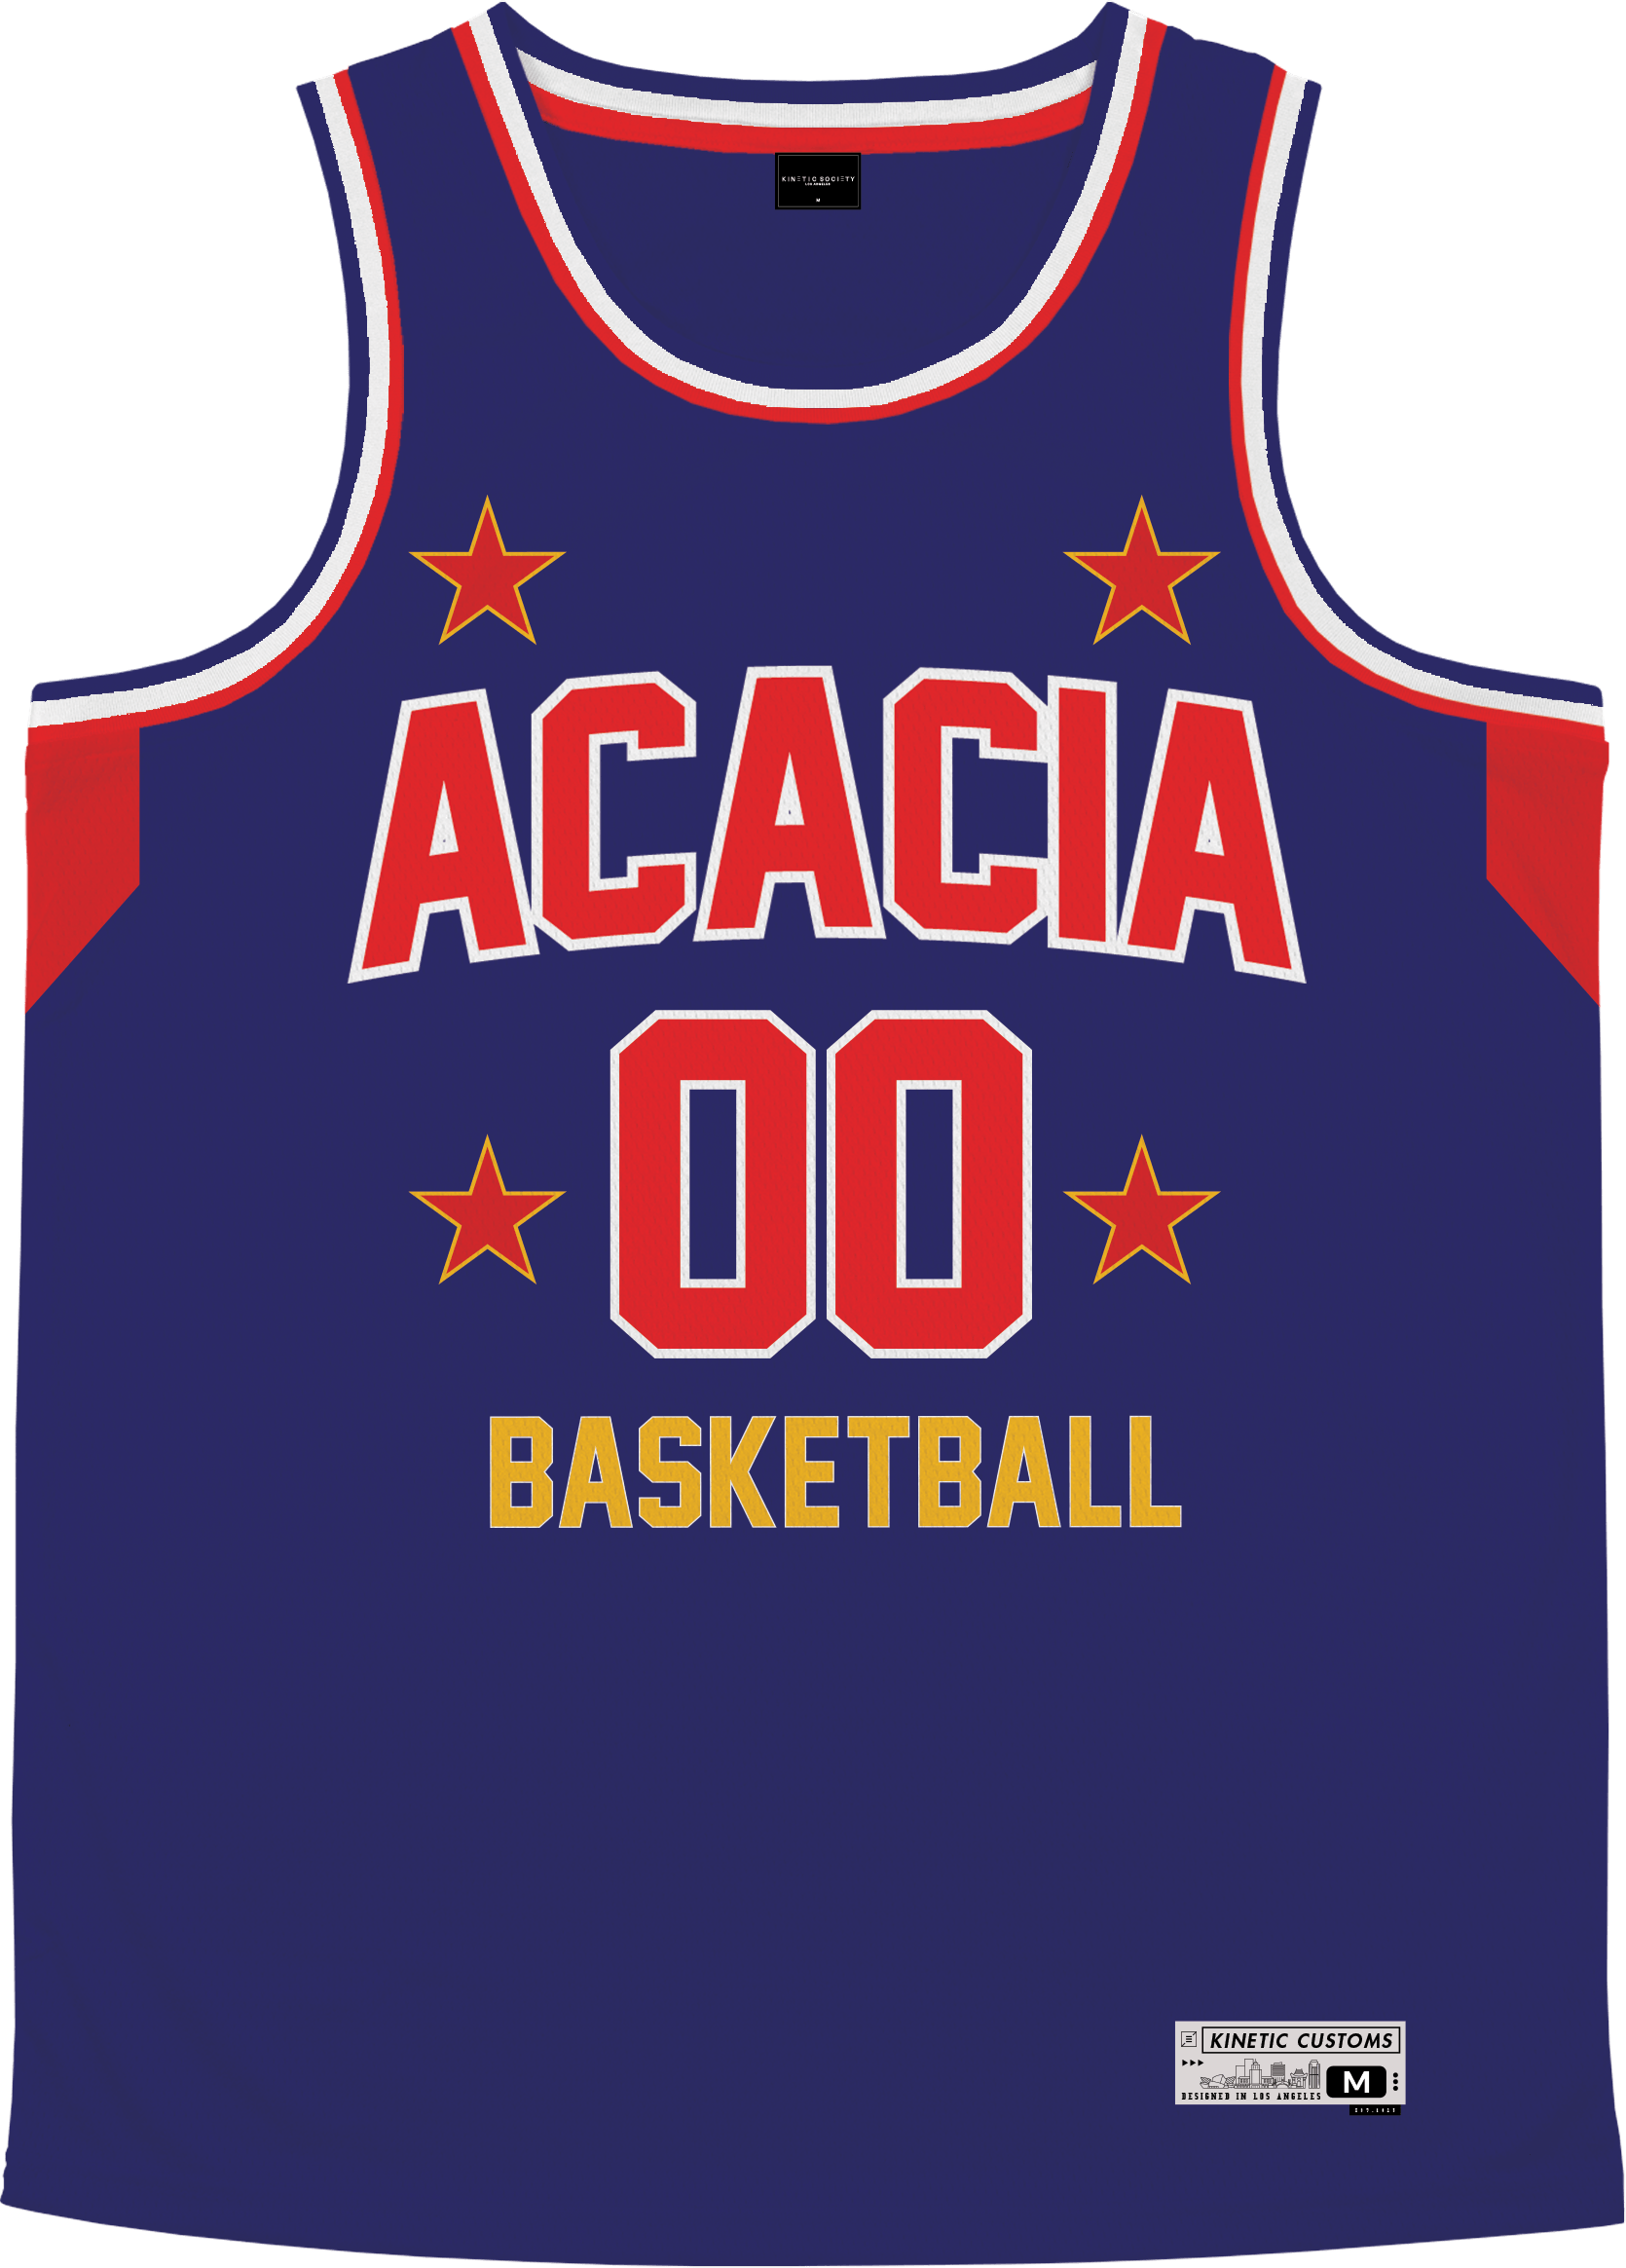 Acacia - Retro Ballers Basketball Jersey Premium Basketball Kinetic Society LLC 